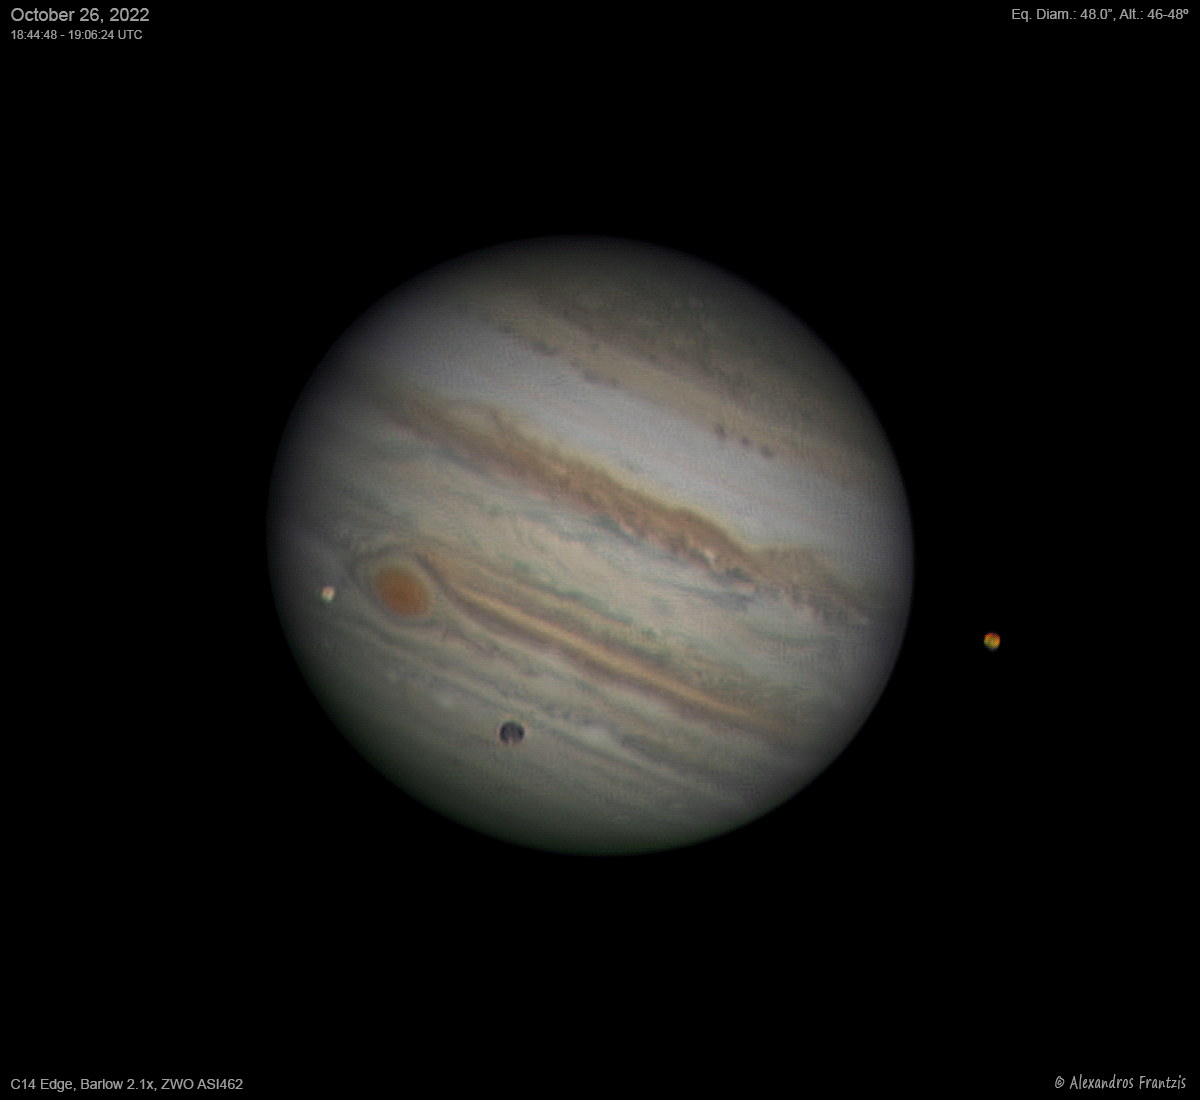 2022-10-26, Jupiter with Europa, Ganymede & Io, Animation of 22 min, C14 Edge, Barlow 2.1x, ASI 462, 18_44_48-19_06_24 UTC.gif